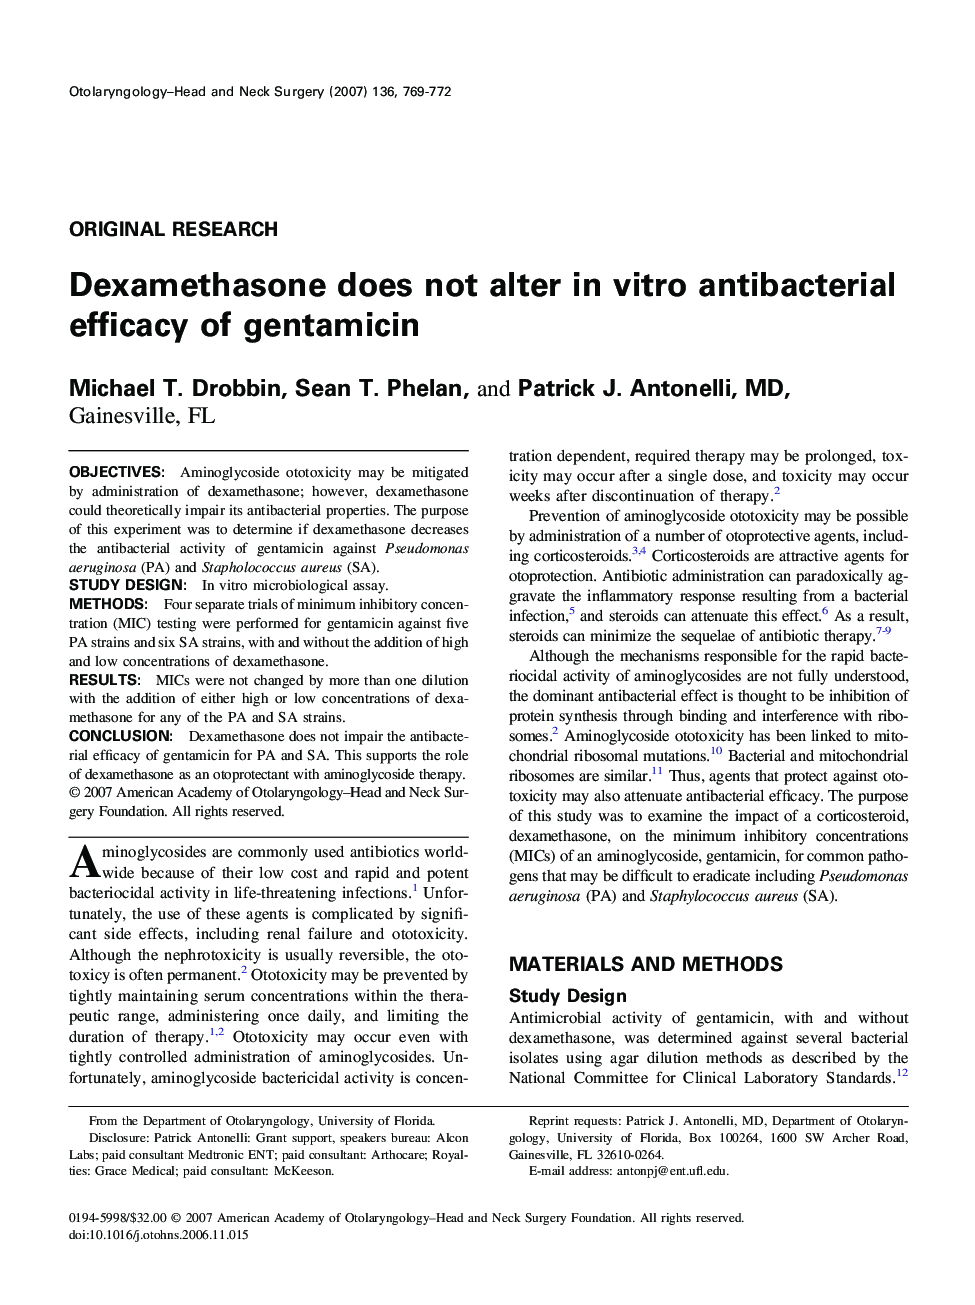 Dexamethasone does not alter in vitro antibacterial efficacy of gentamicin